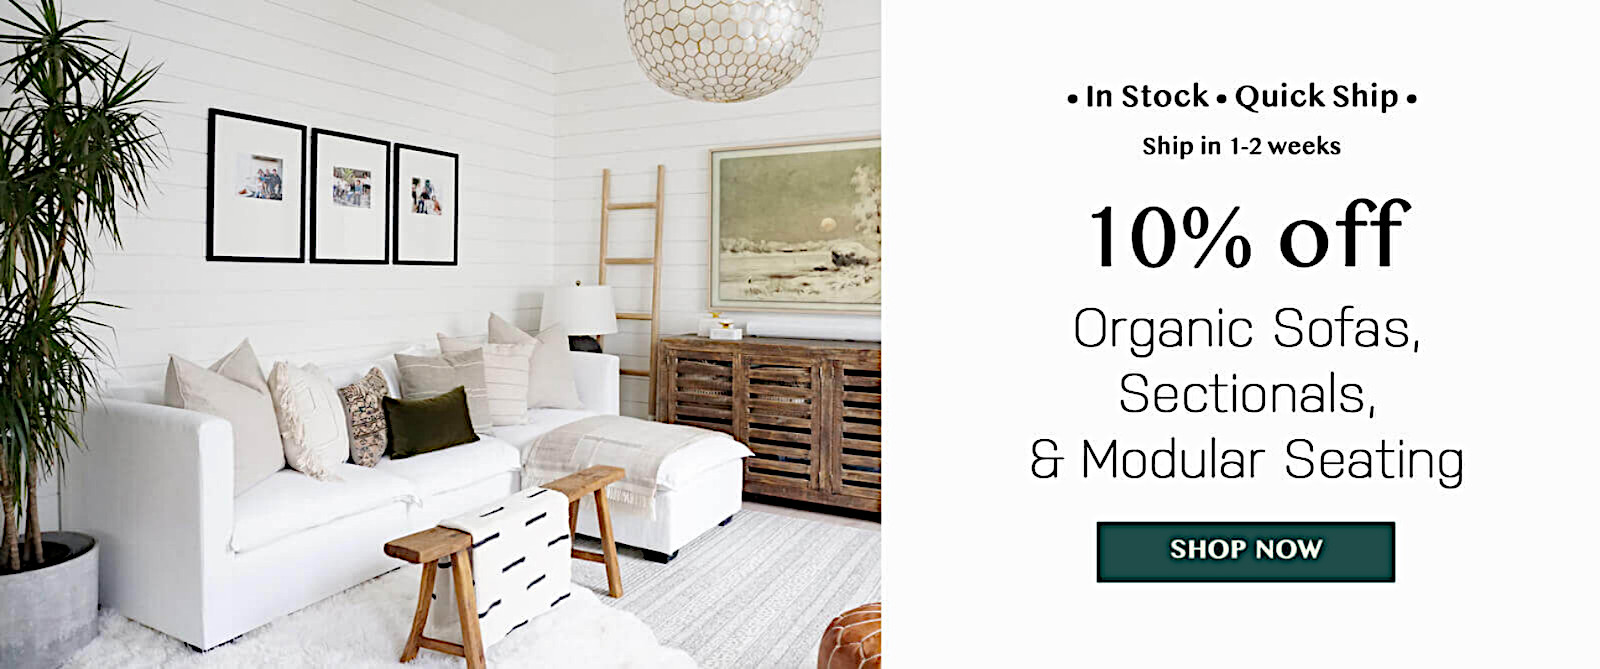 Organic sofas sectionals modular seating